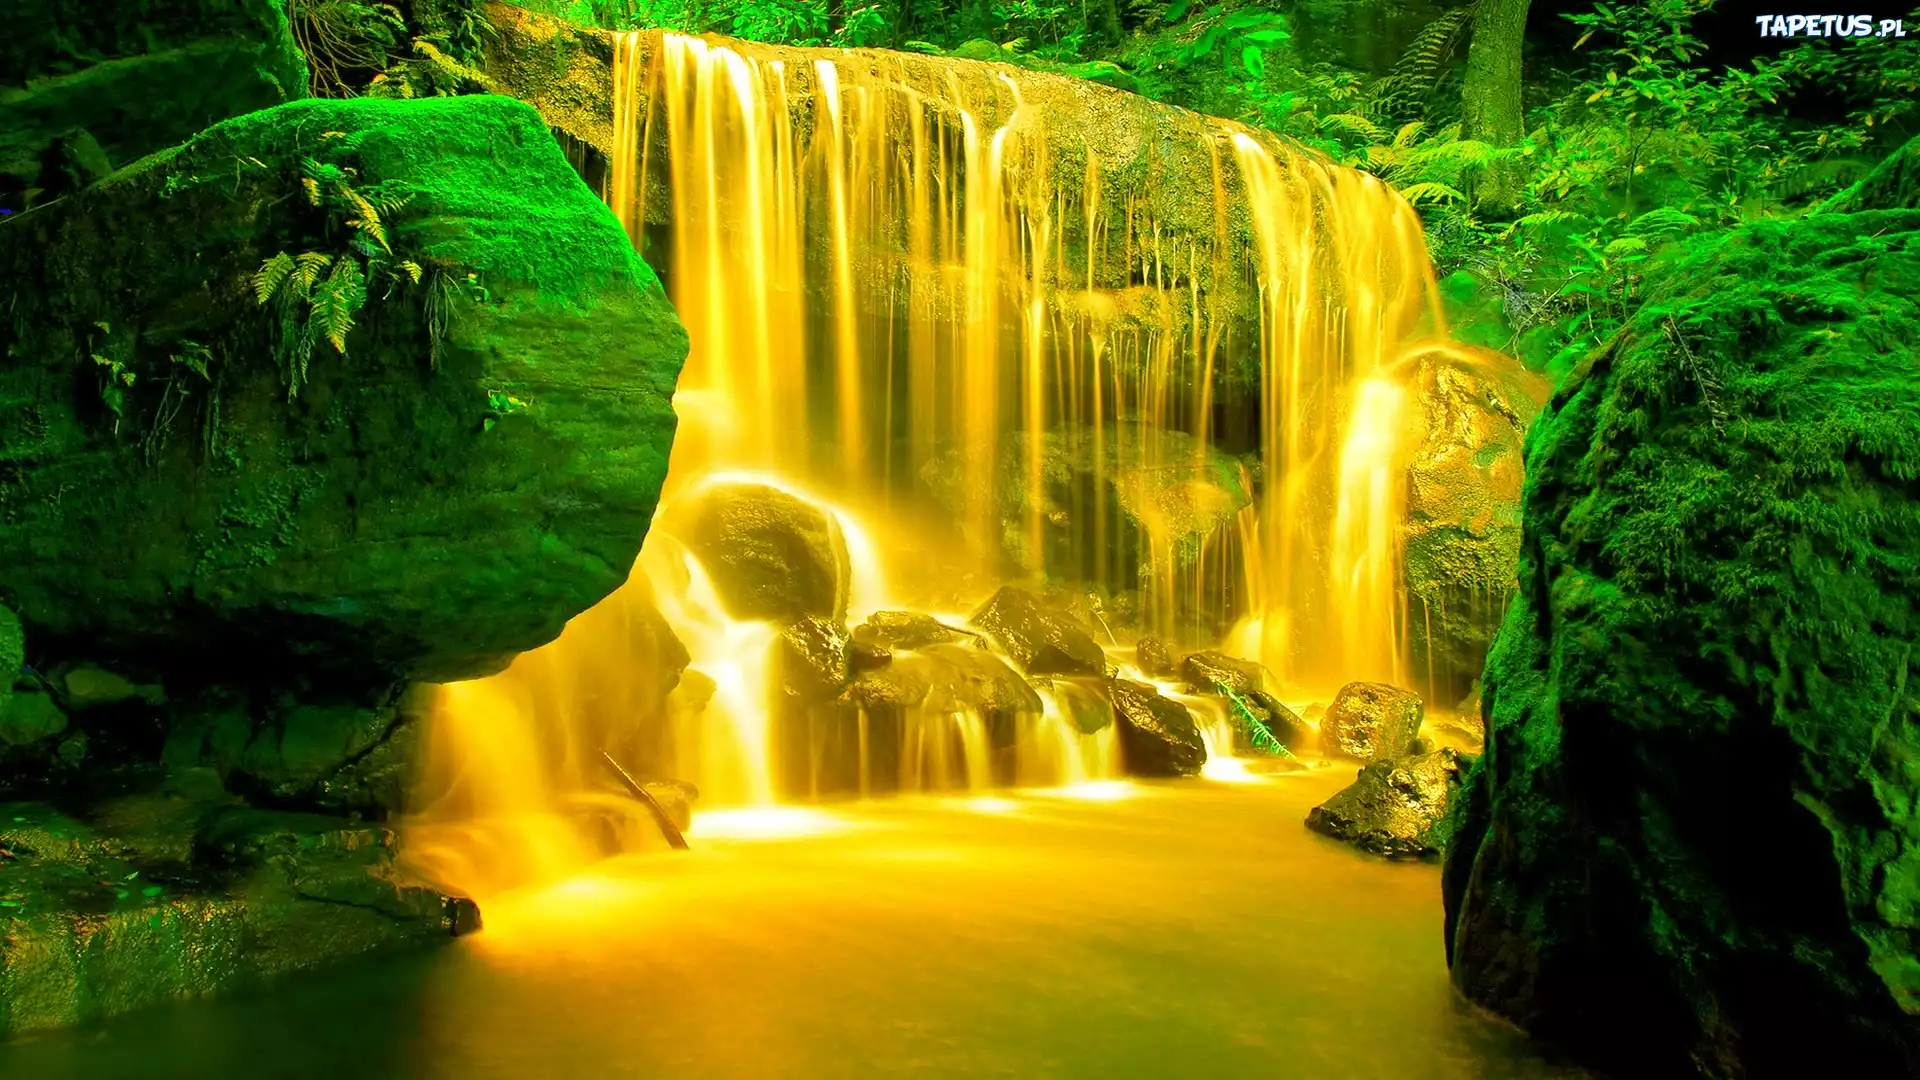 http://www.tapetus.pl/obrazki/n/126728_zloty-wodospad-zielone-skaly.jpg